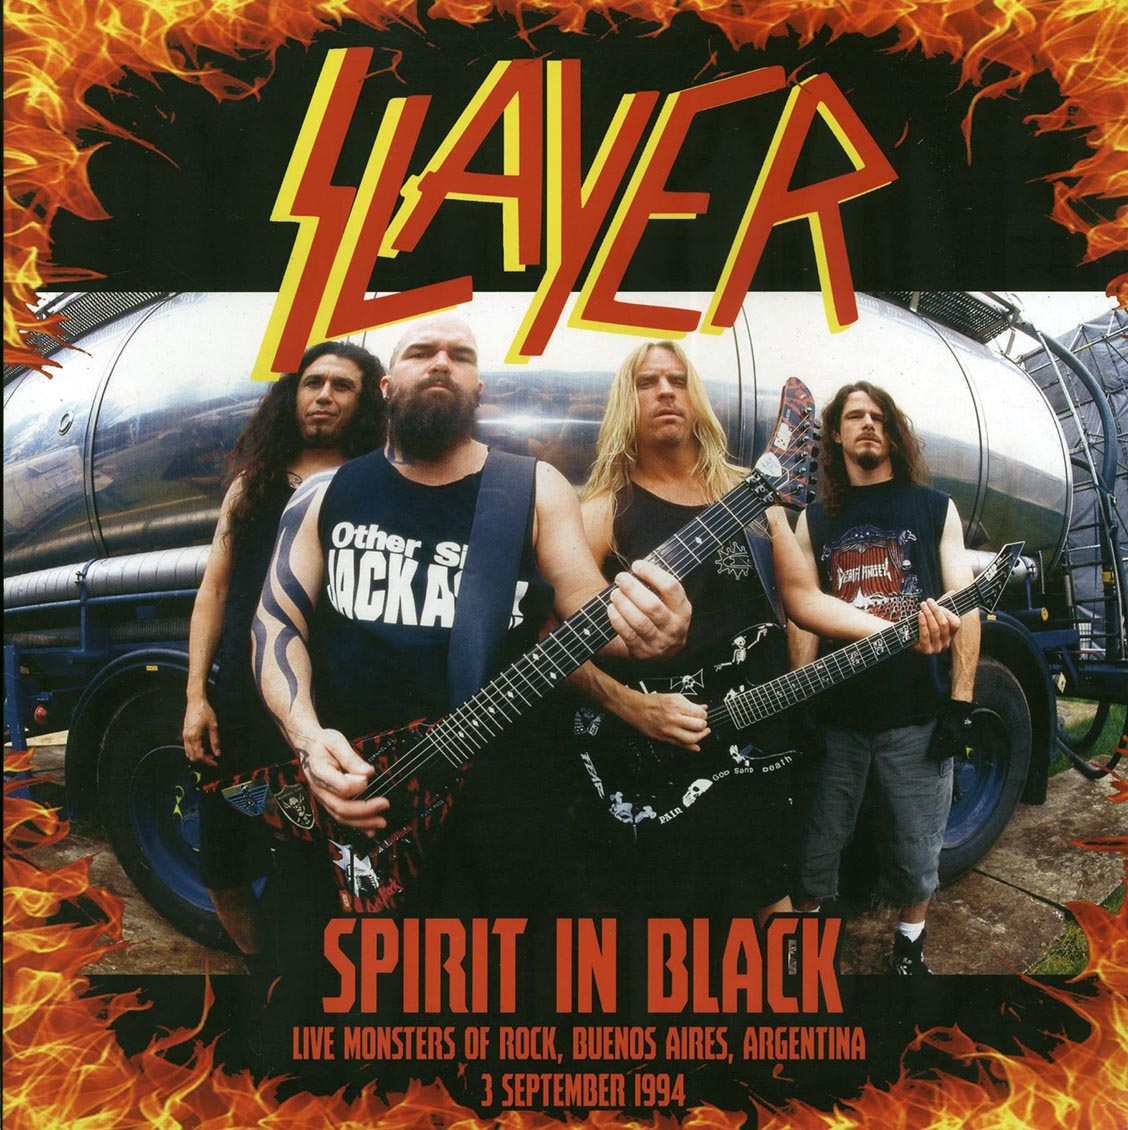 Slayer - Spirit In Black: Live Monsters Of Rock, Buenos Aires, Argentina 3 September 1994 (ltd. 500 copies made) - Vinyl LP